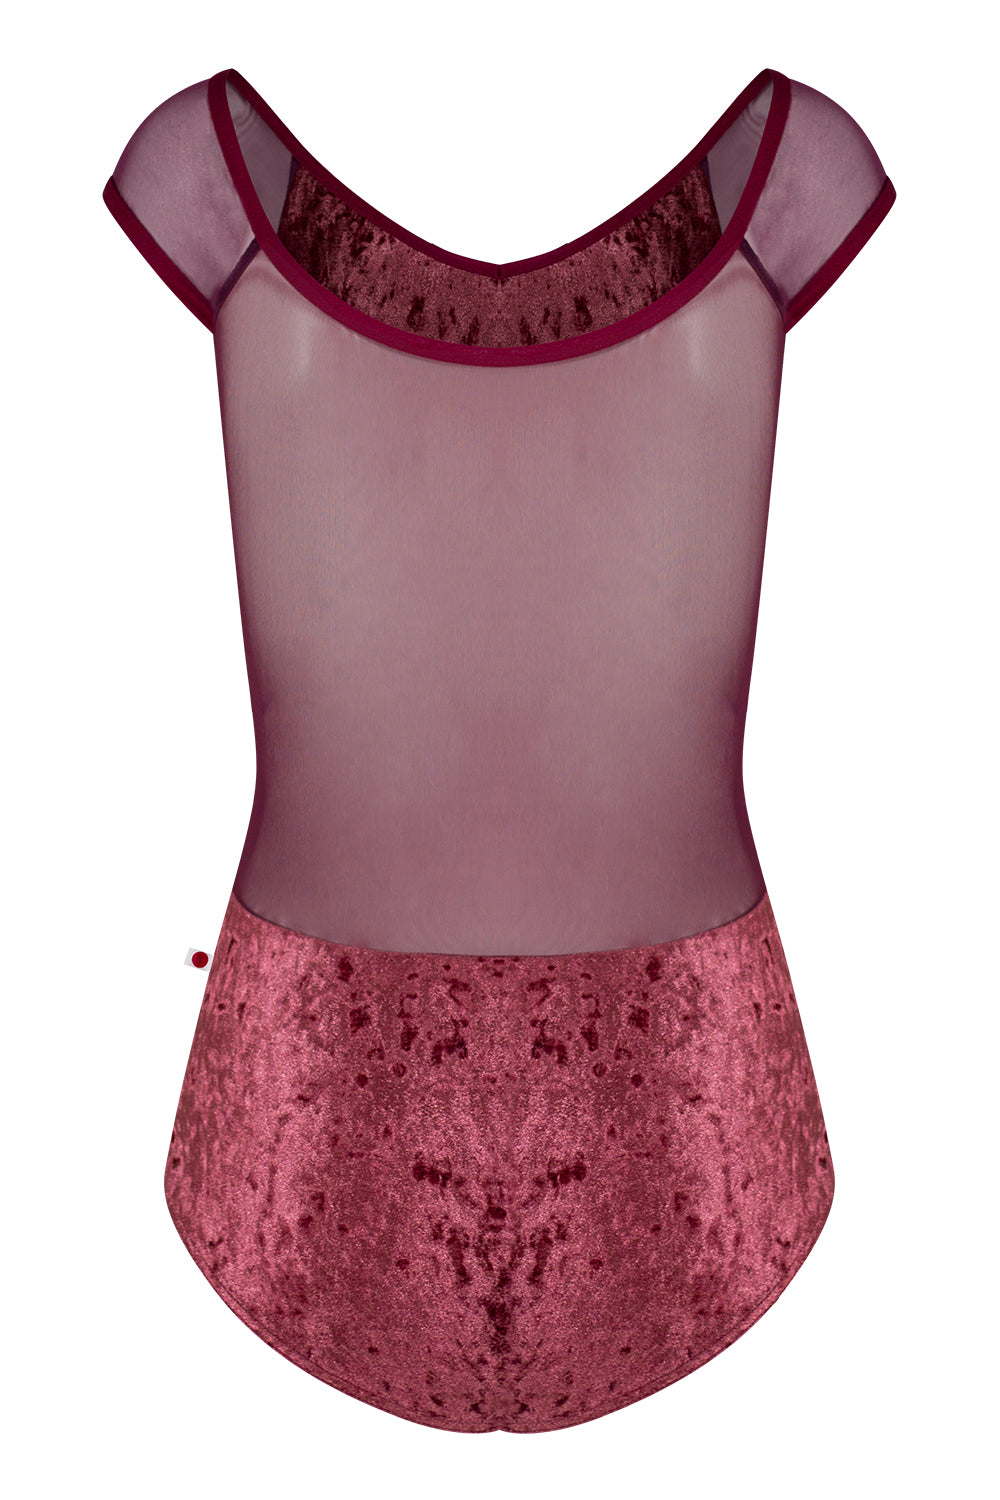 Nina leotard in CV-Garnet body color with Mesh Opera top & cap sleeves color and N-Burgundy trim color